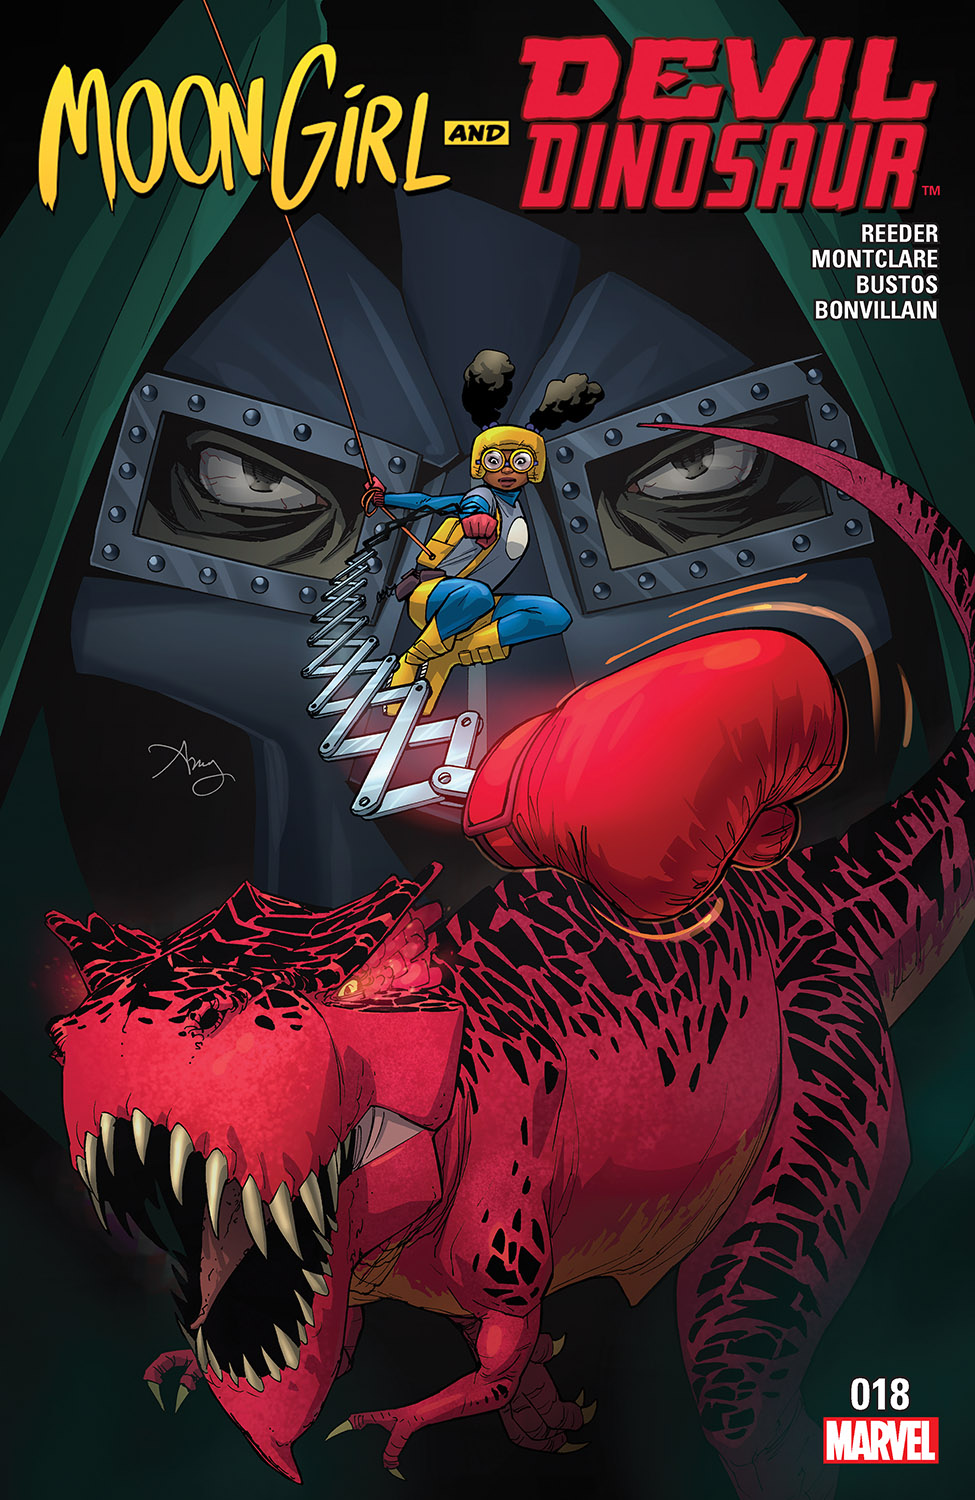 Moon Girl and Devil Dinosaur (2015) #18